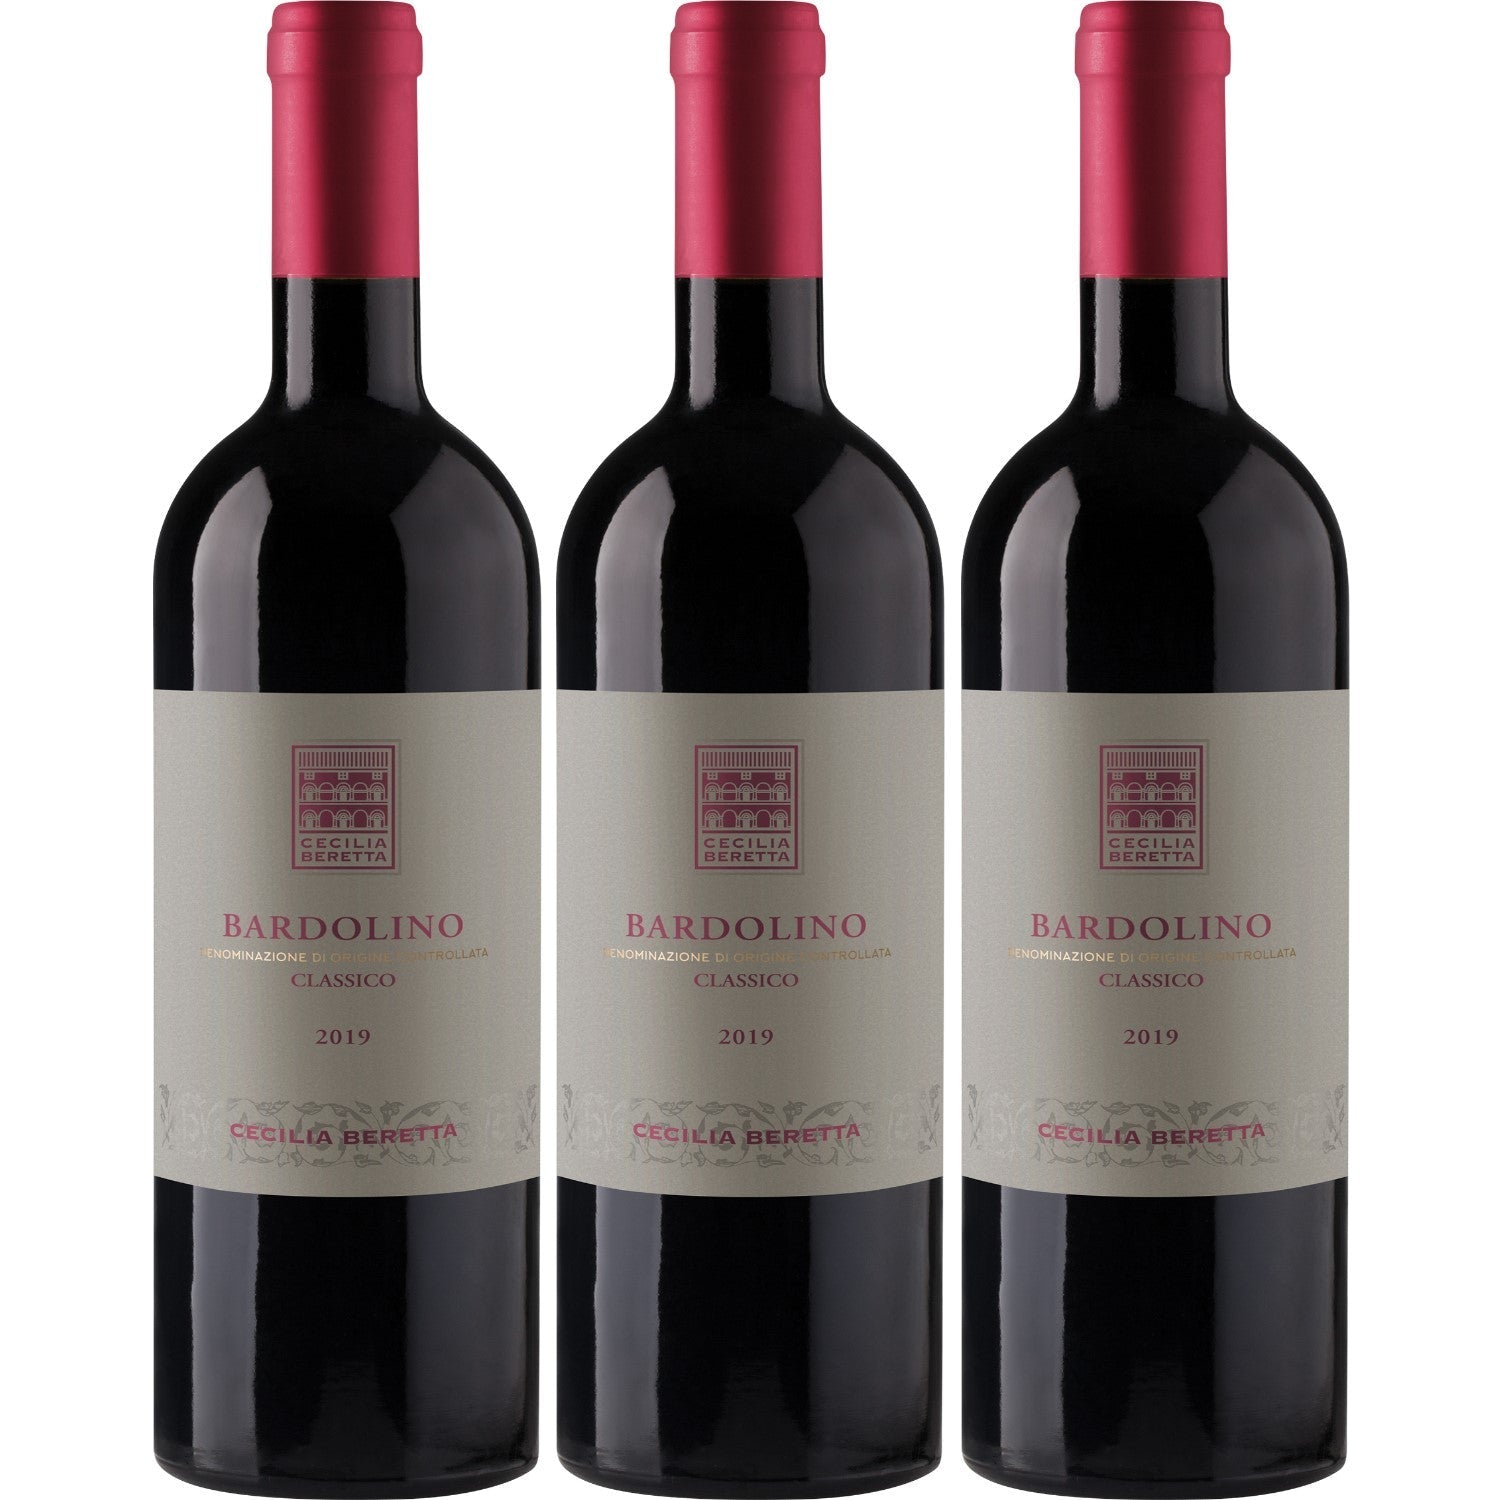 Cecilia Beretta Bardolino Classico Costiera Rotwein Wein trocken Italien (3 x 0.75l) - Versanel -